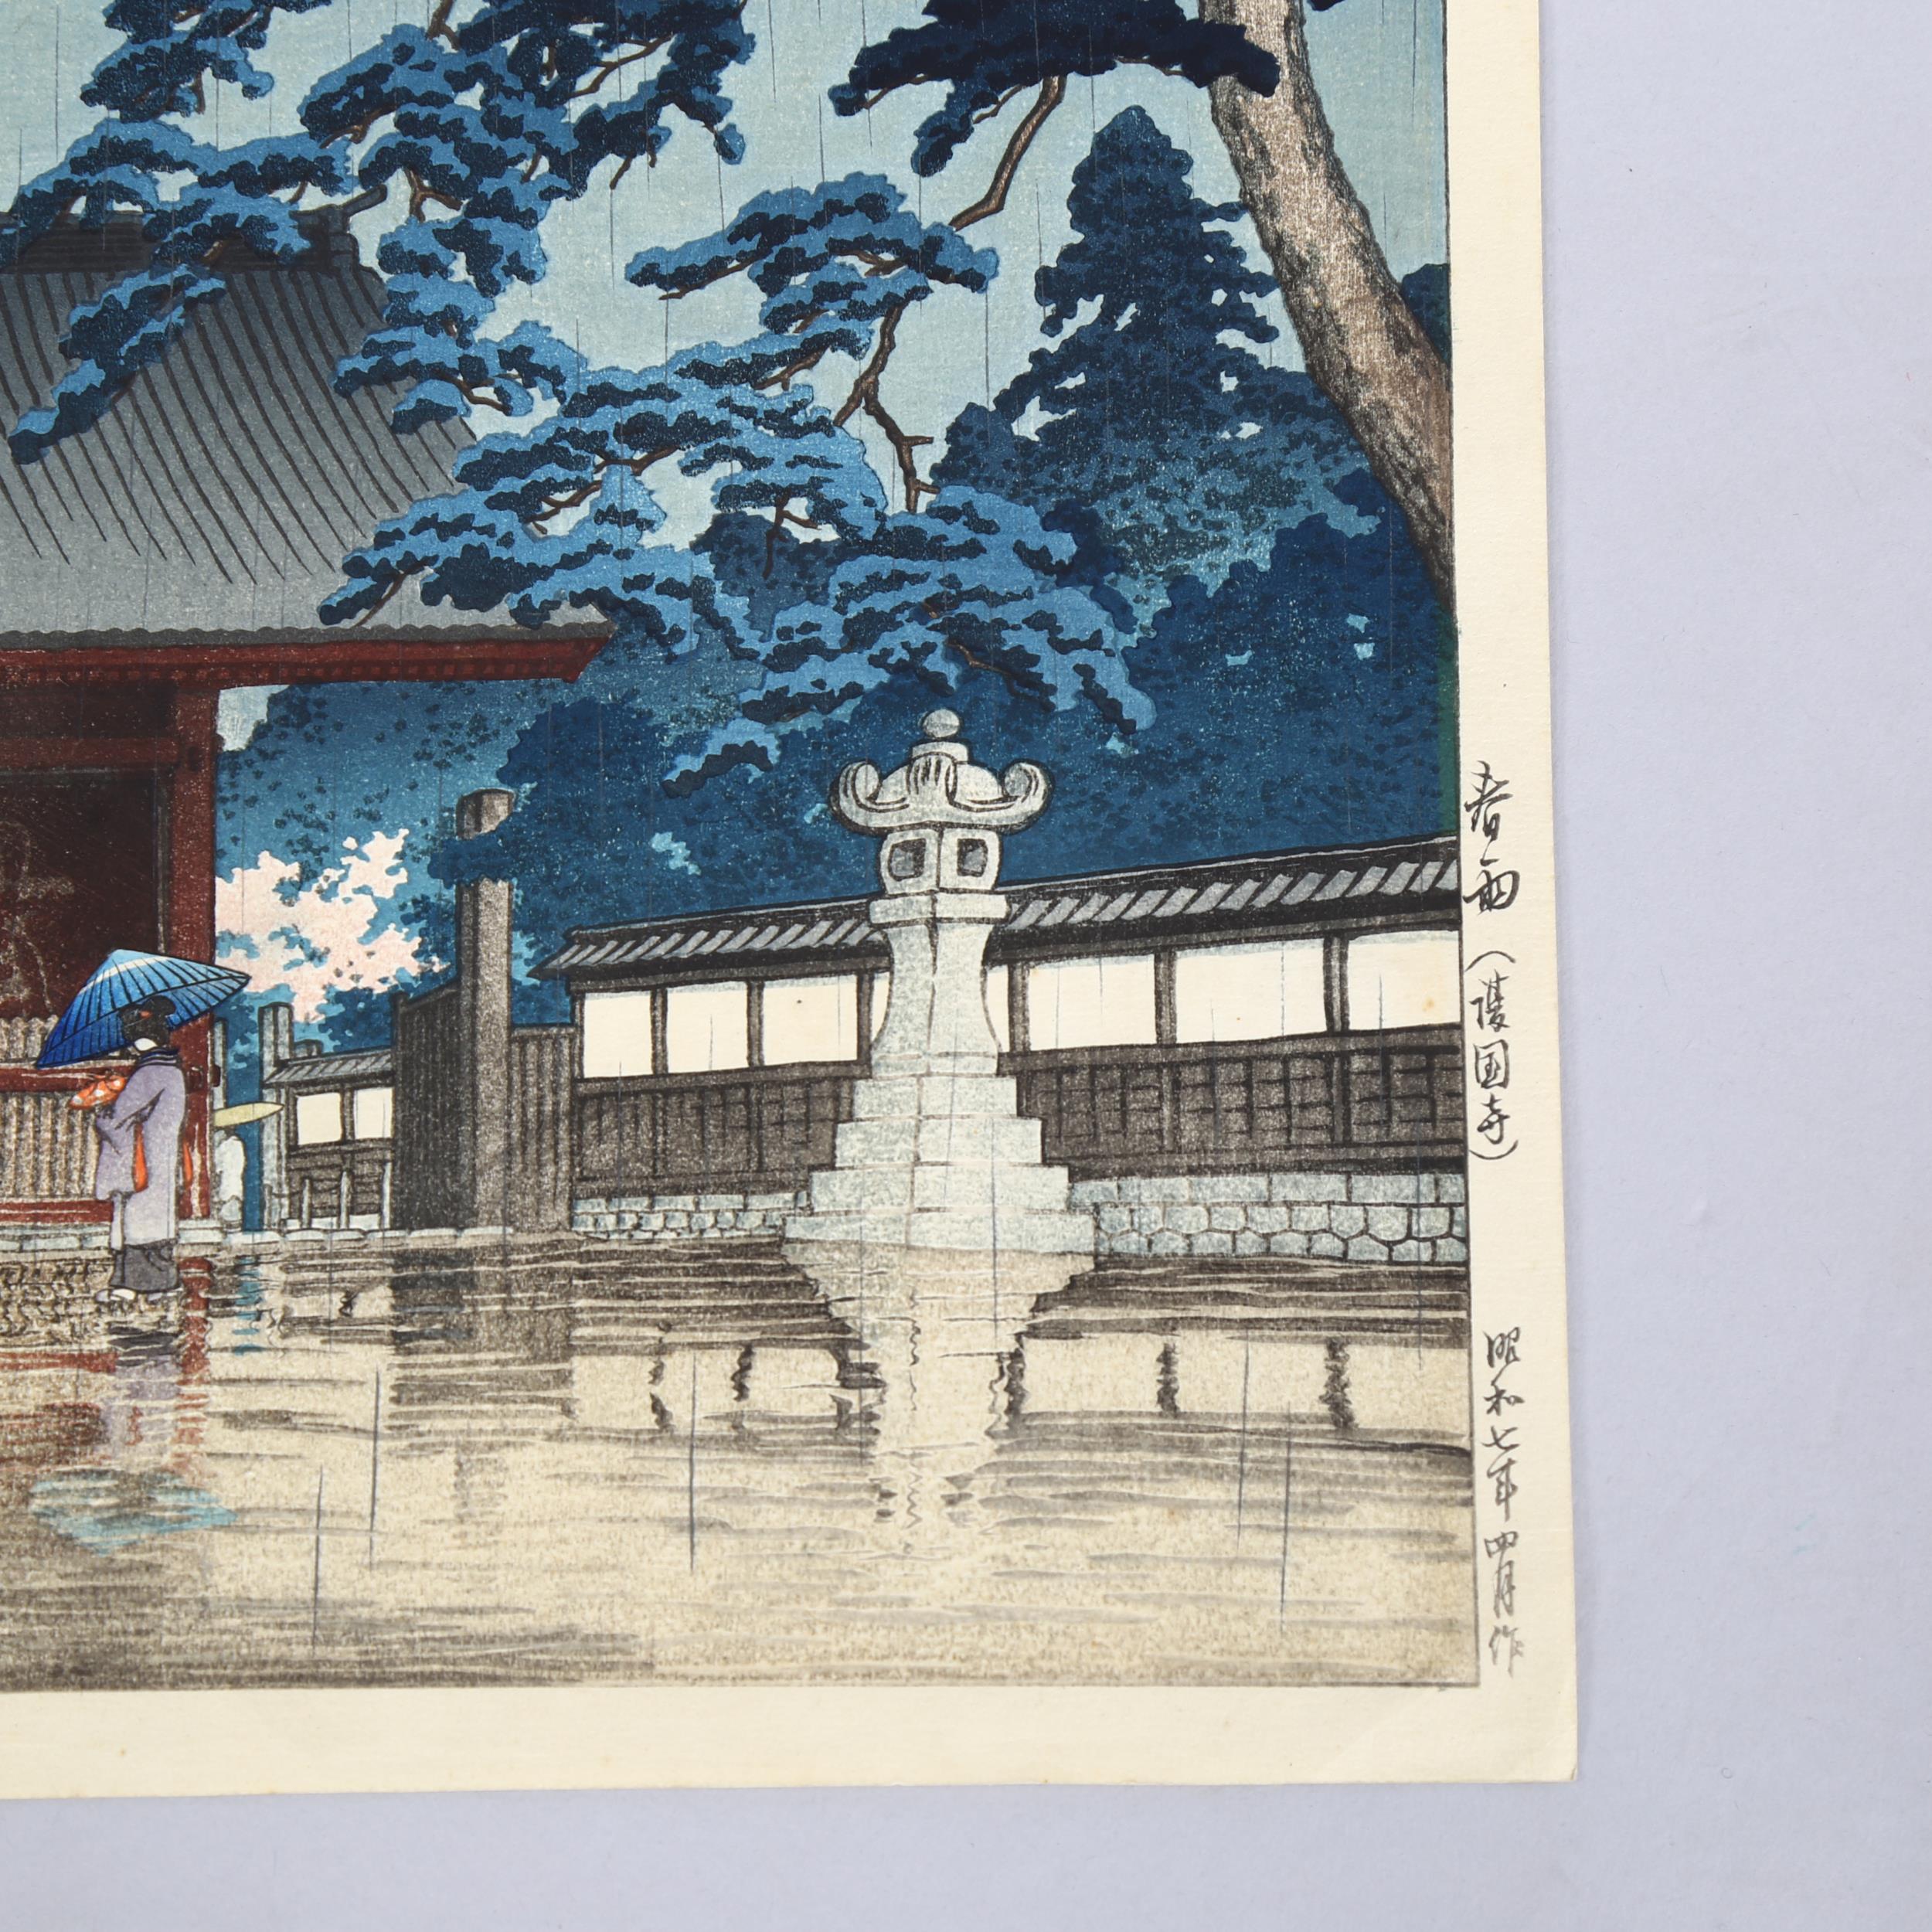 Kawase Hasui (1883 - 1957), spring rain Gokoku temple, woodblock print, published 1932, image 36cm x - Image 2 of 4